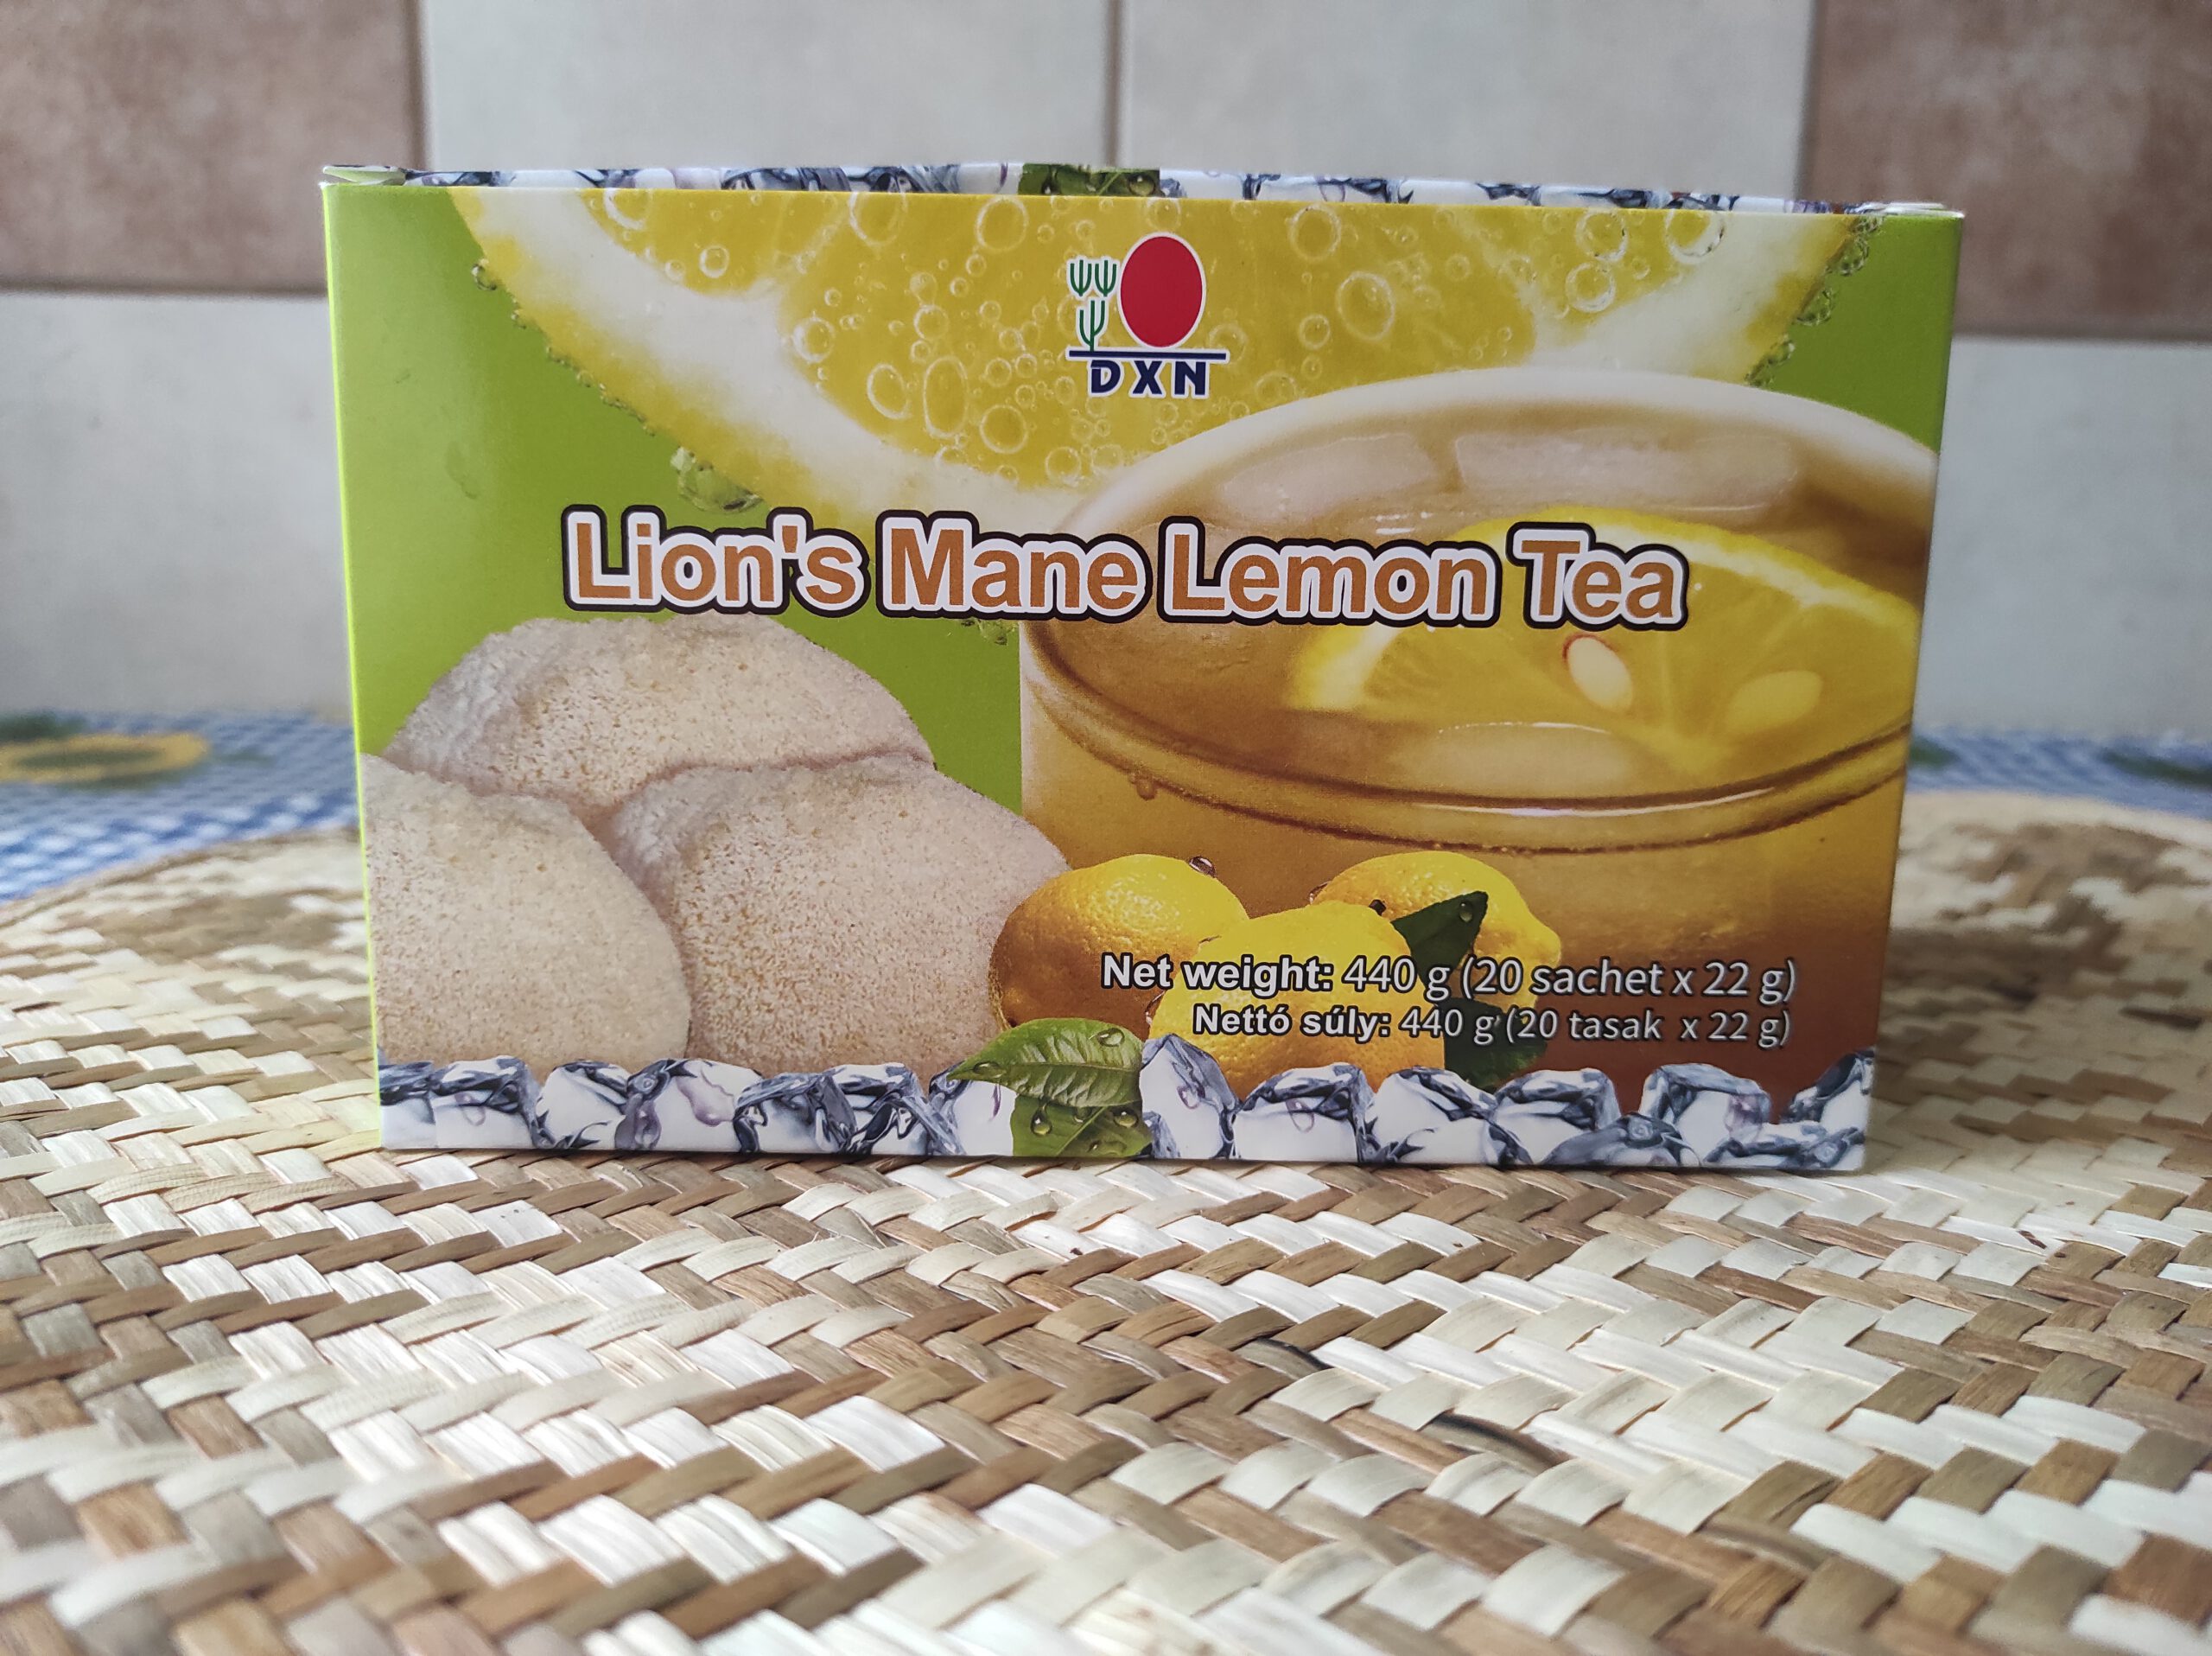 DXN Chinese hedgehog mushroom oolong tea with lemon flavour